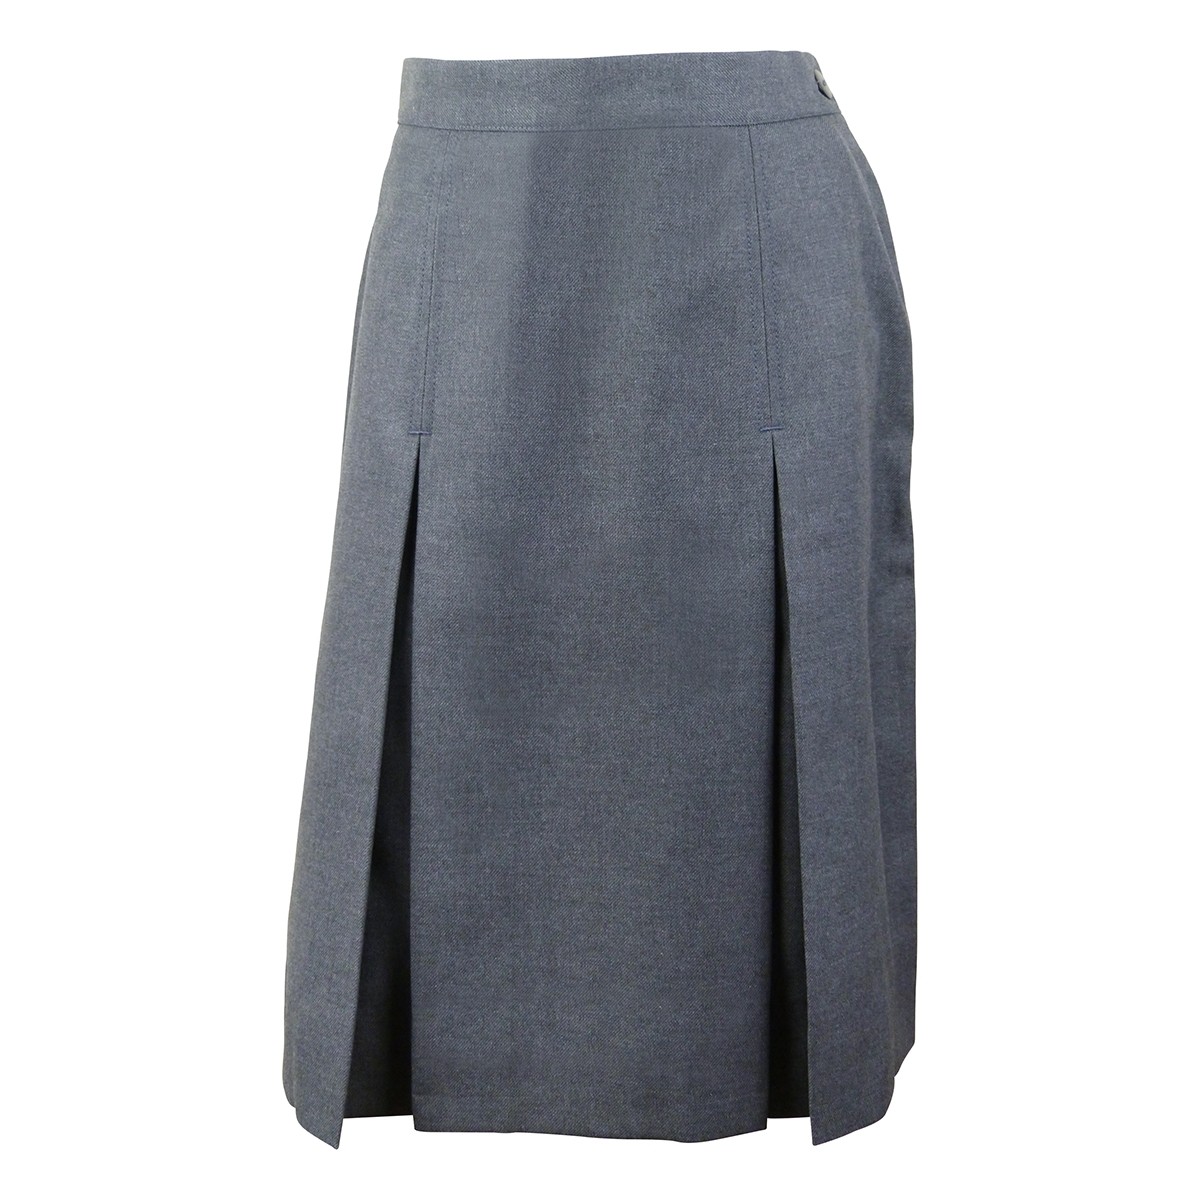 Skirt Grey Senior - St Philip's Christian College Uniform Shop